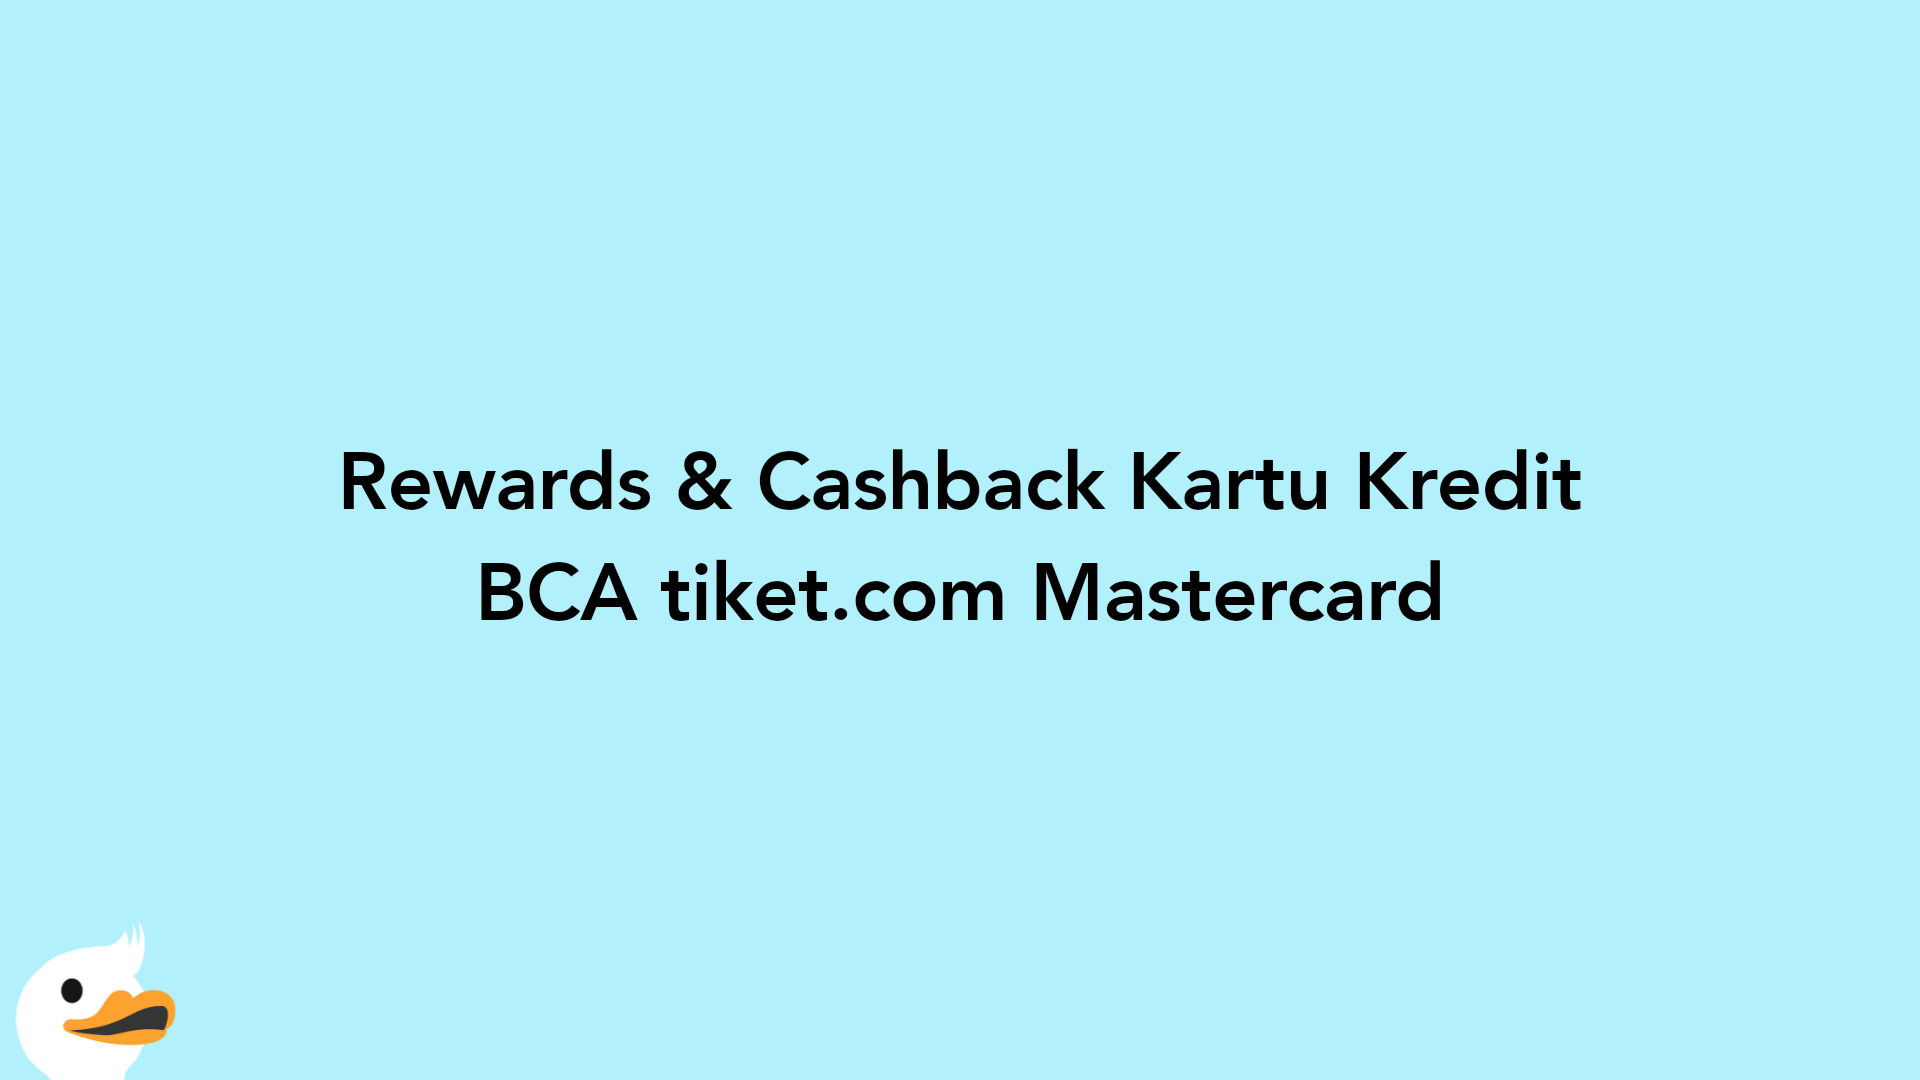 Rewards & Cashback Kartu Kredit BCA tiket.com Mastercard